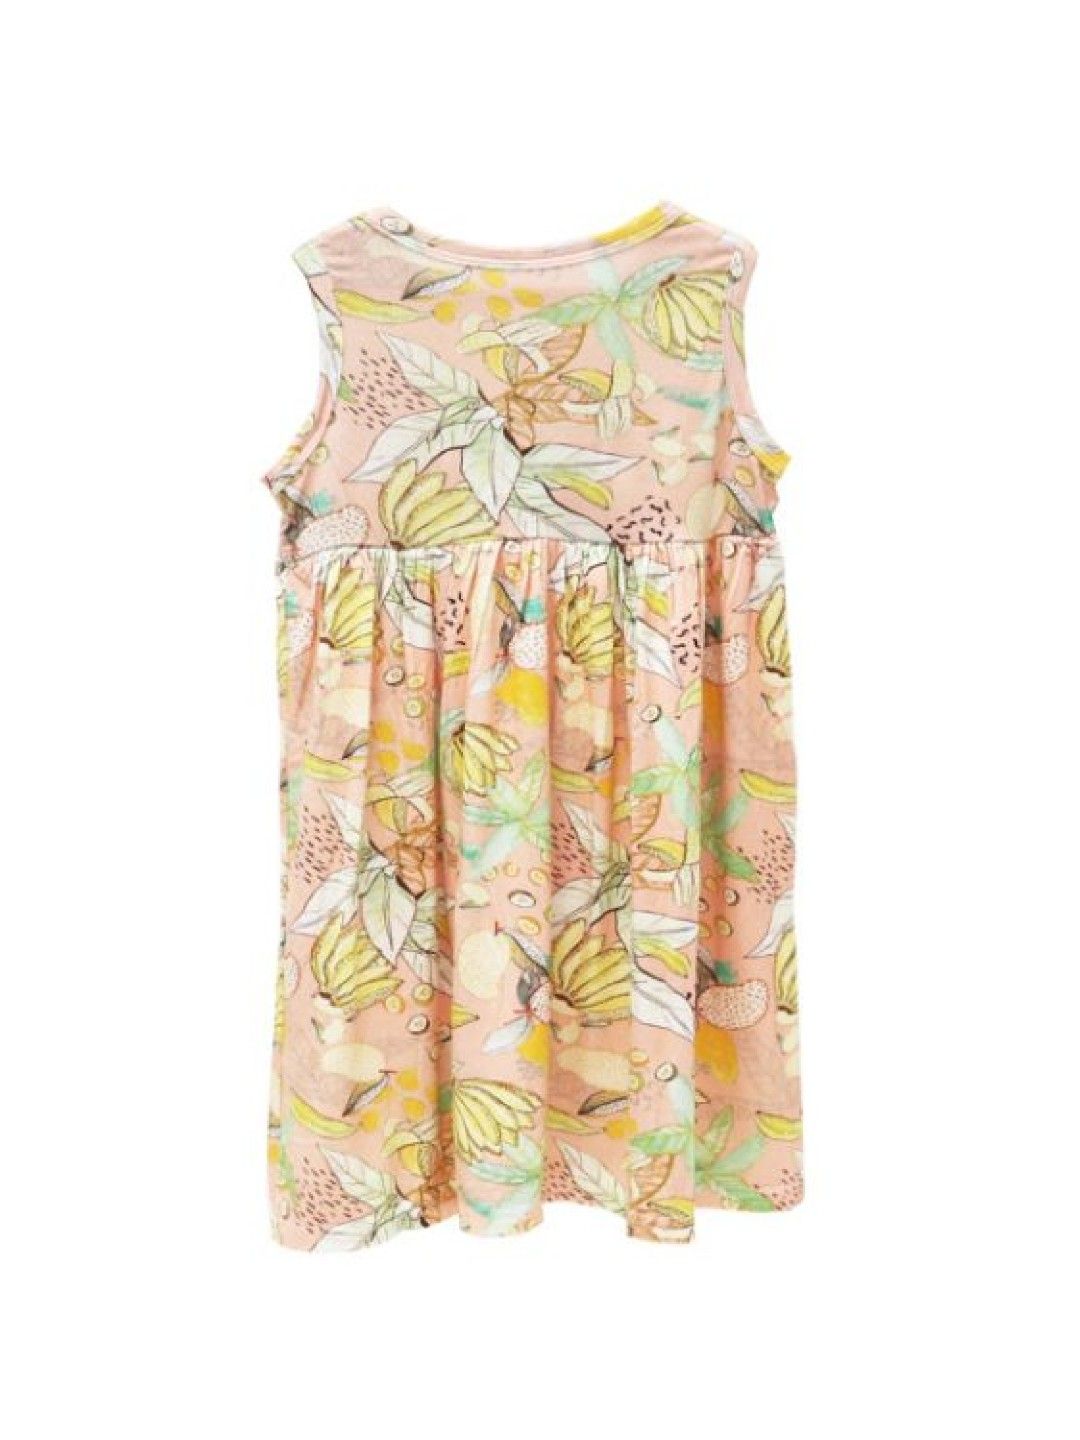 bean fashion Alessa Lanot Saging Swirl Print Dress (Multicolor- Image 2)